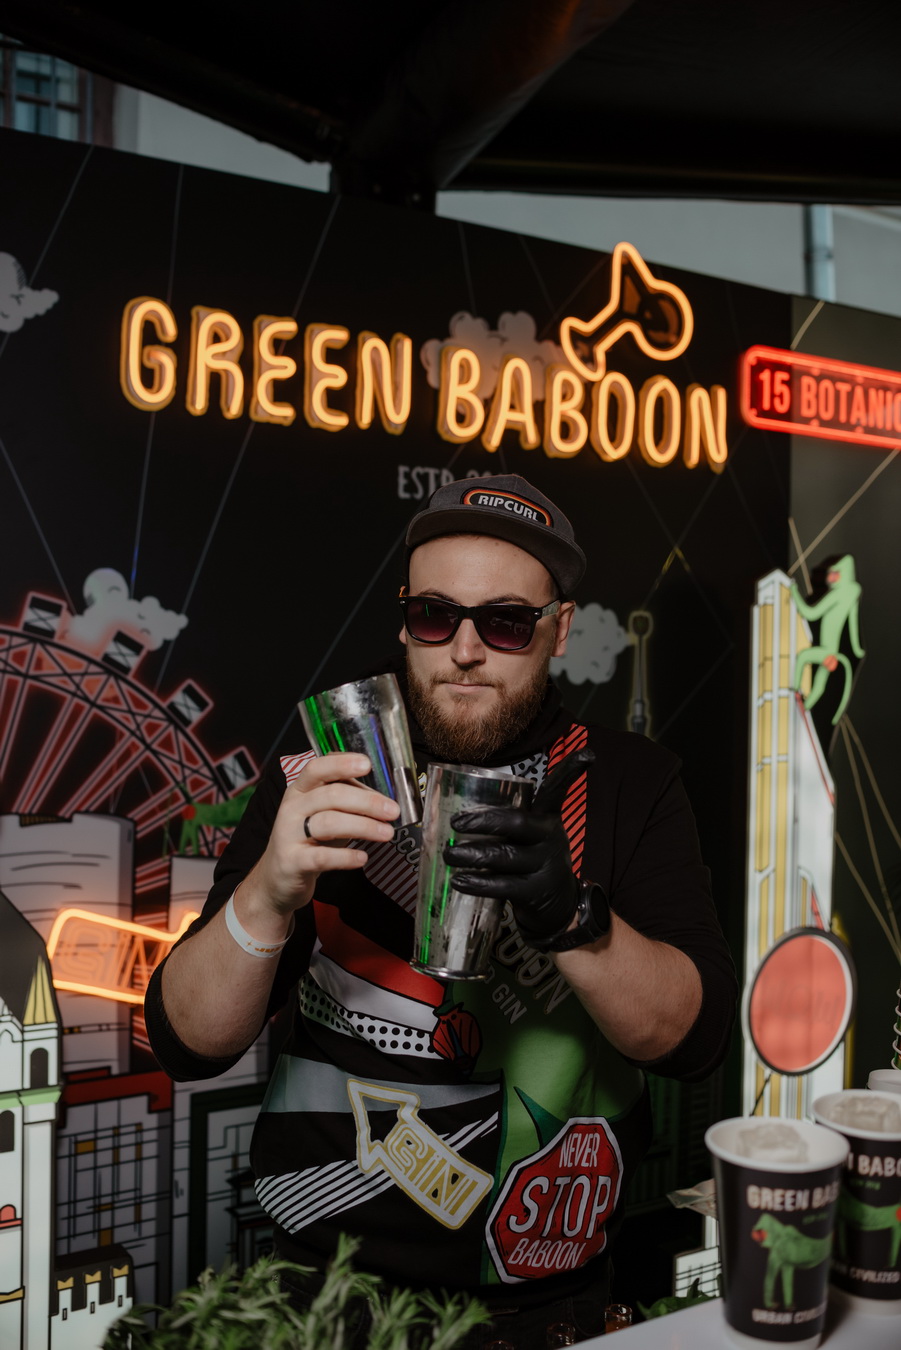 Выездной бар на ярмарке blazar и Gin Green Baboon